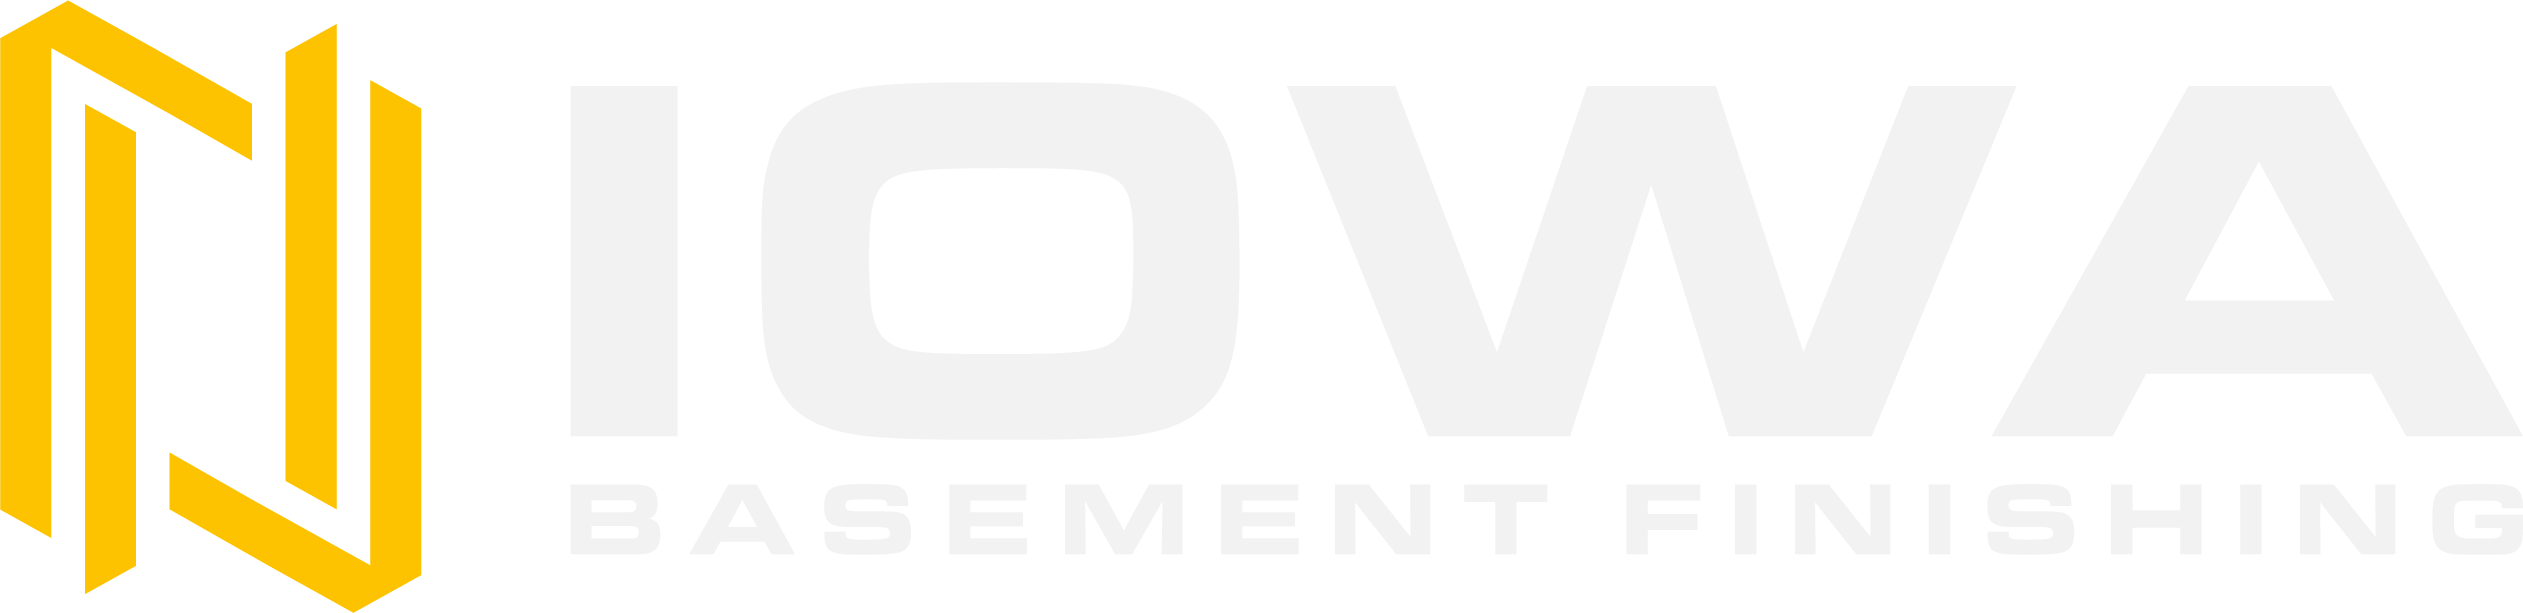 Iowa Basement Finishing Logo